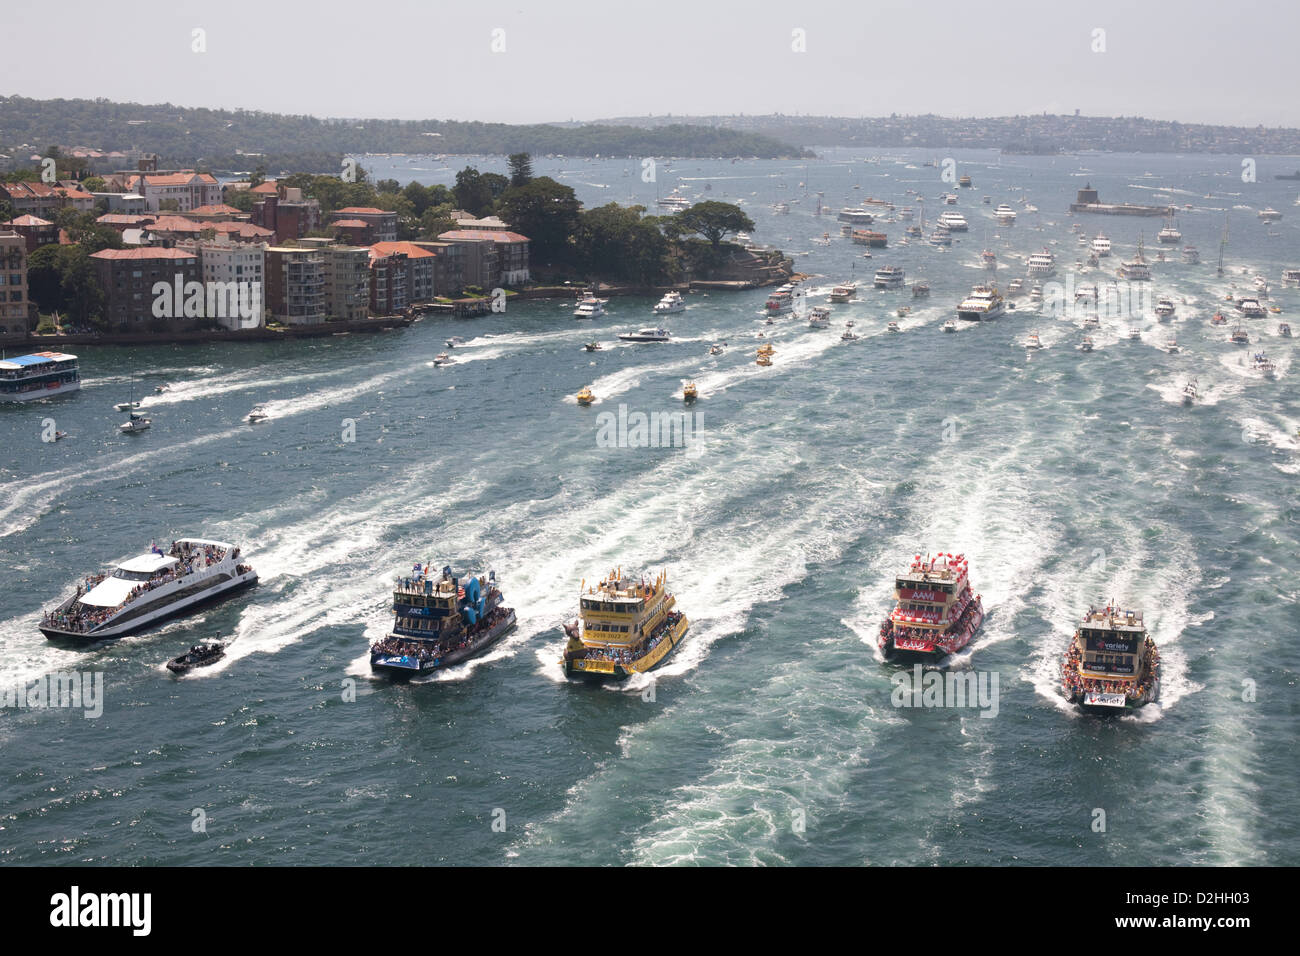 Sydney Harbour Ferry  - Ferrython race held every Australia Day Sydney Harbour Australia Stock Photo